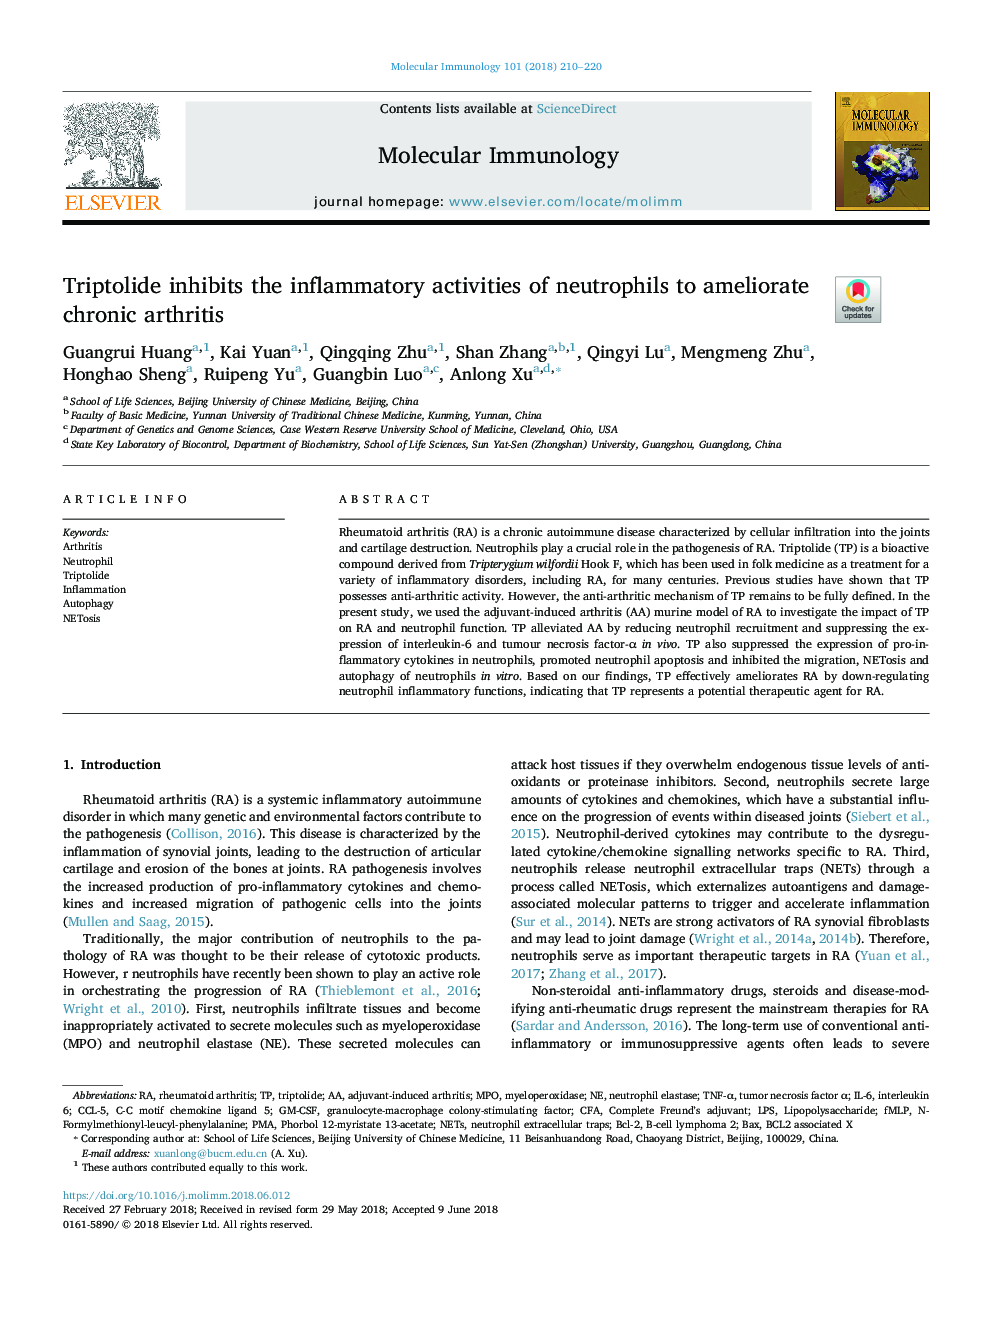 Triptolide inhibits the inflammatory activities of neutrophils to ameliorate chronic arthritis